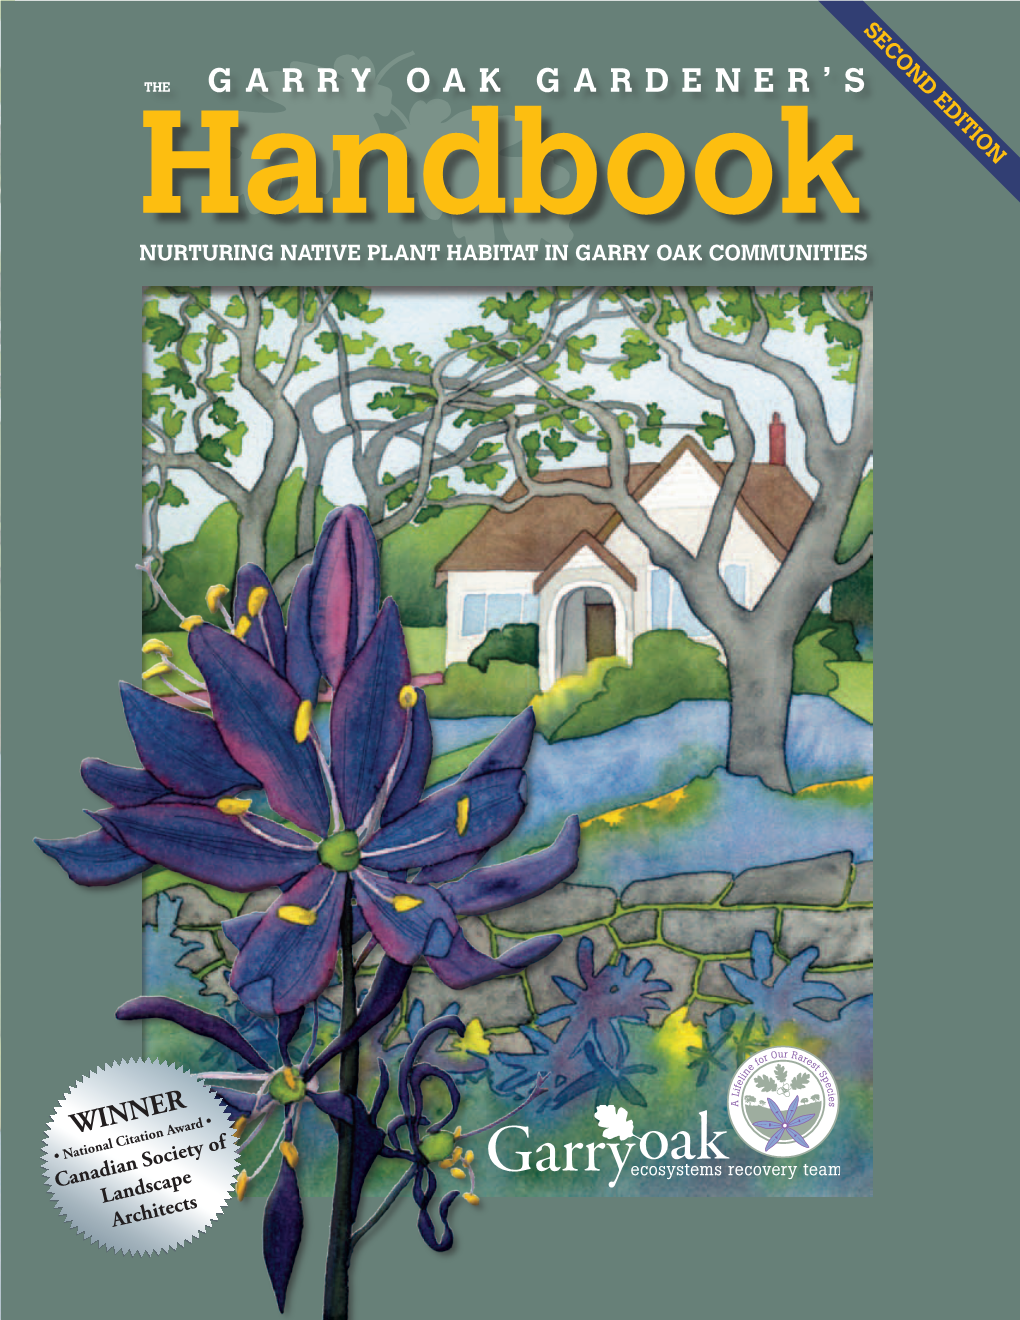 Garry Oak Gardener's Handbook. 2009.Pdf